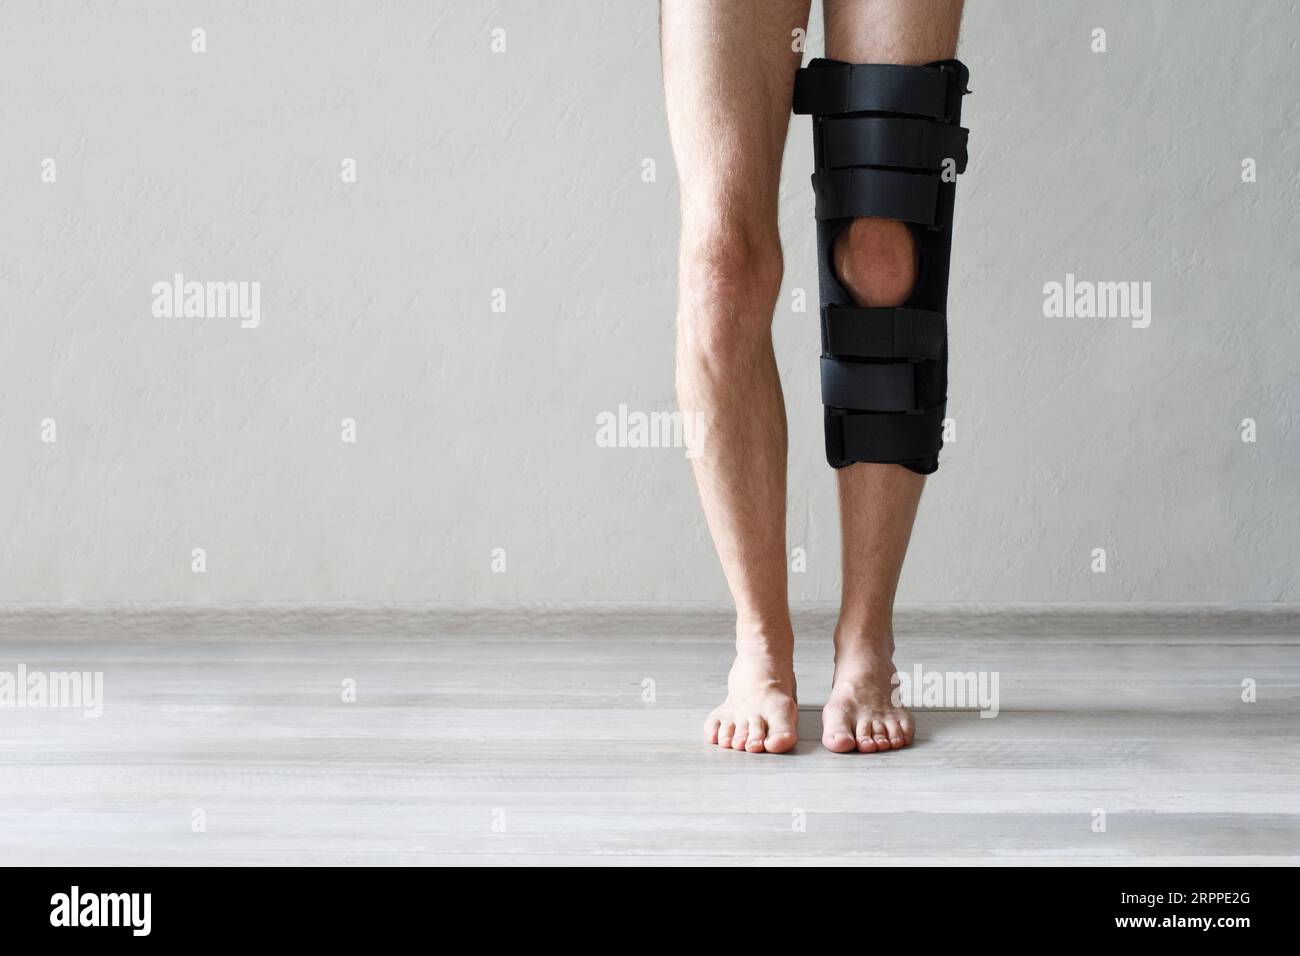 https://c8.alamy.com/comp/2RPPE2G/leg-brace-on-knee-against-gray-wall-background-knee-brace-support-for-leg-or-knee-injury-2RPPE2G.jpg